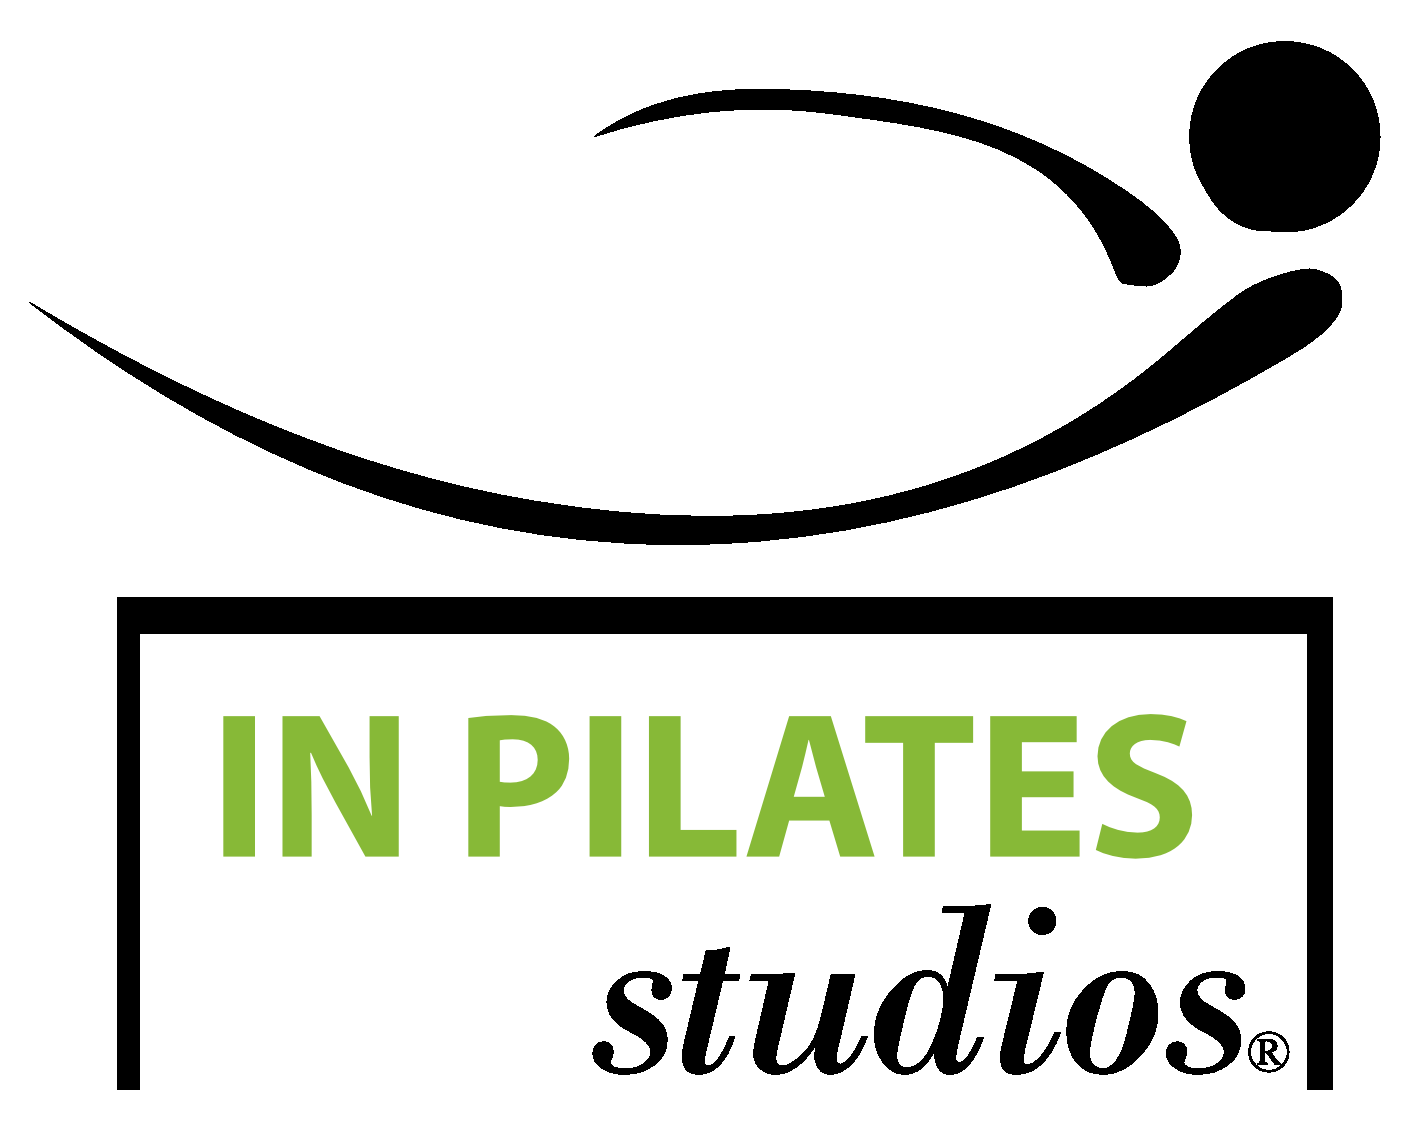 In Pilates